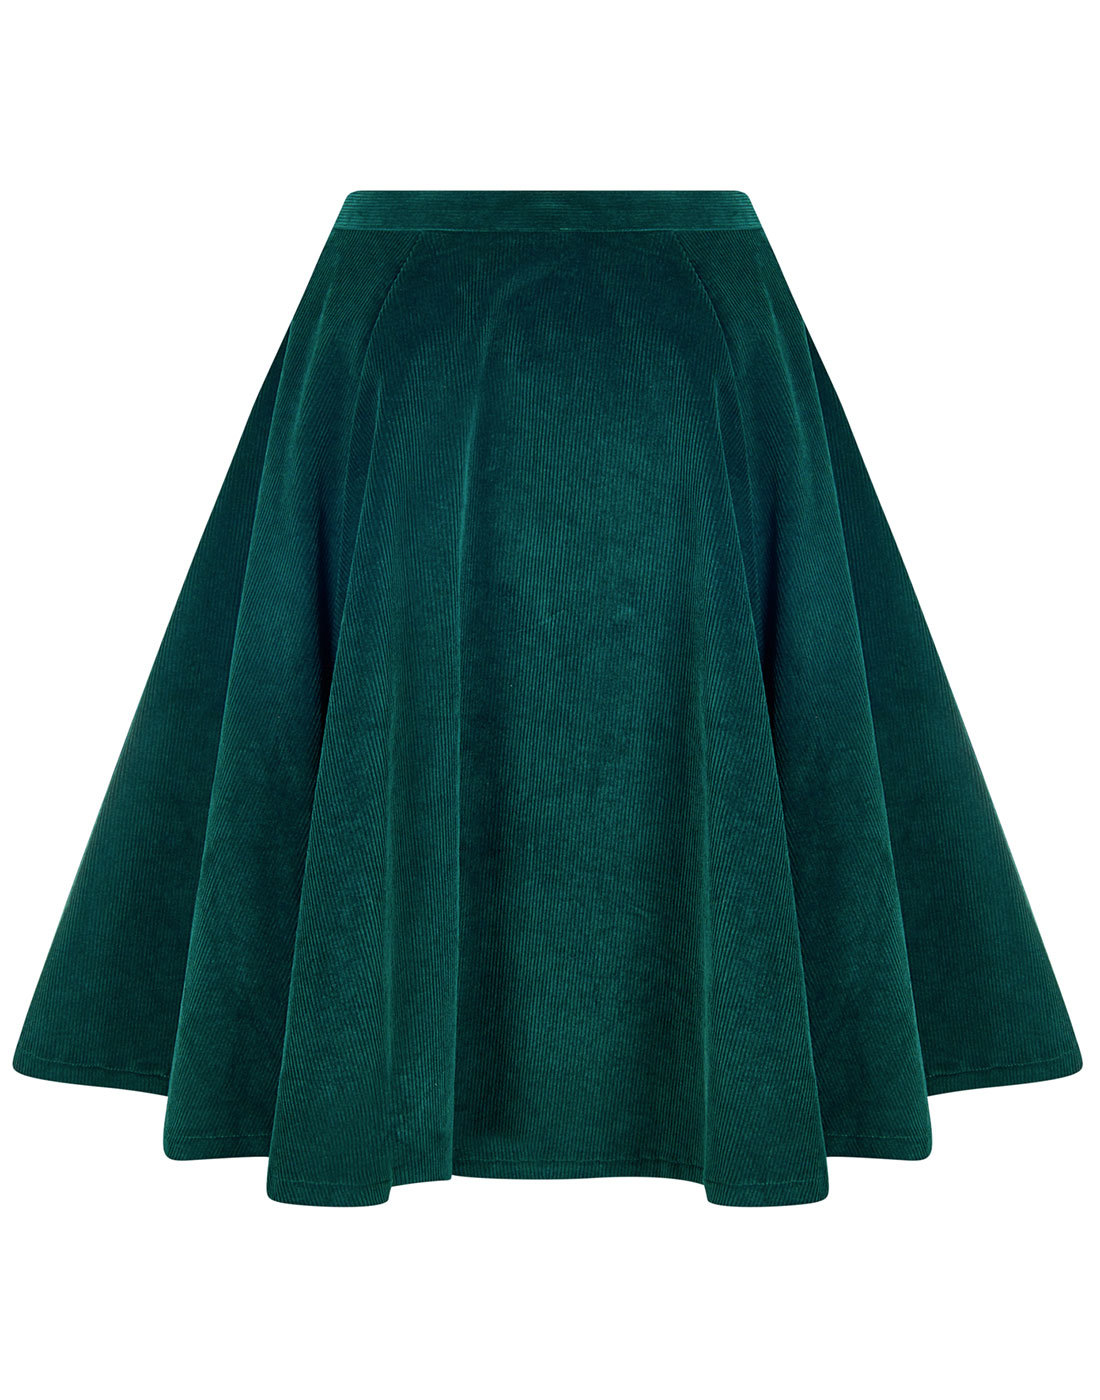 Tia BRIGHT & BEAUTIFUL Retro 60s Cord Middy Skirt